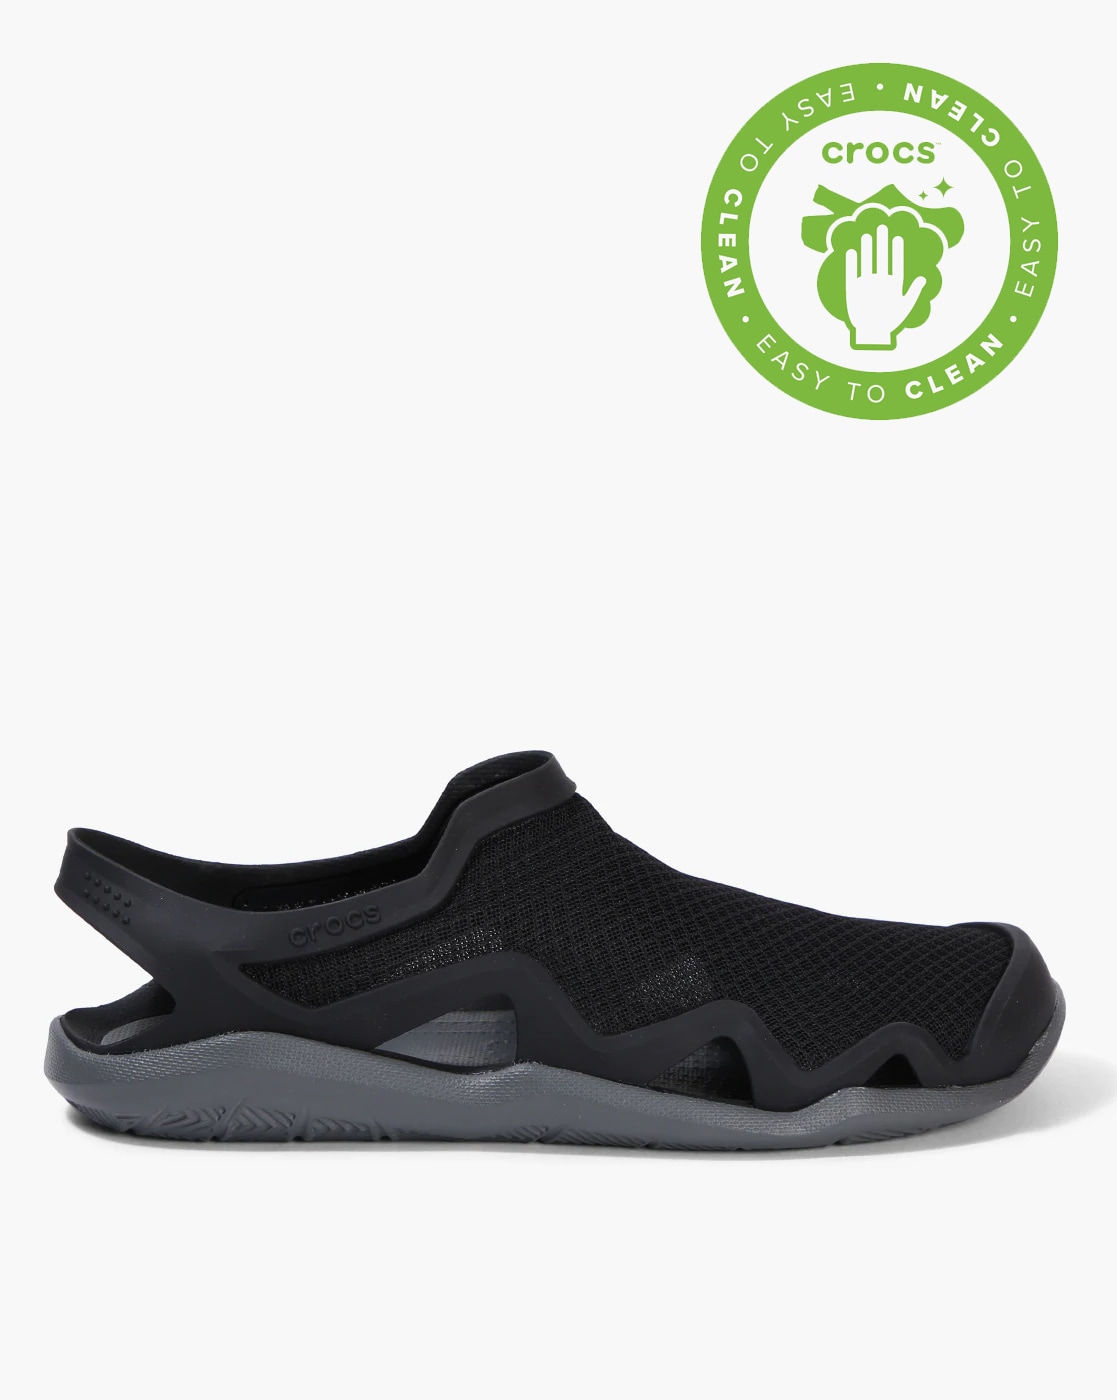 Crocs Men's Swiftwater Sandal Flat, black/black, 7 M US | Shoes outfit  fashion, Barefoot shoes mens, Work shoes women